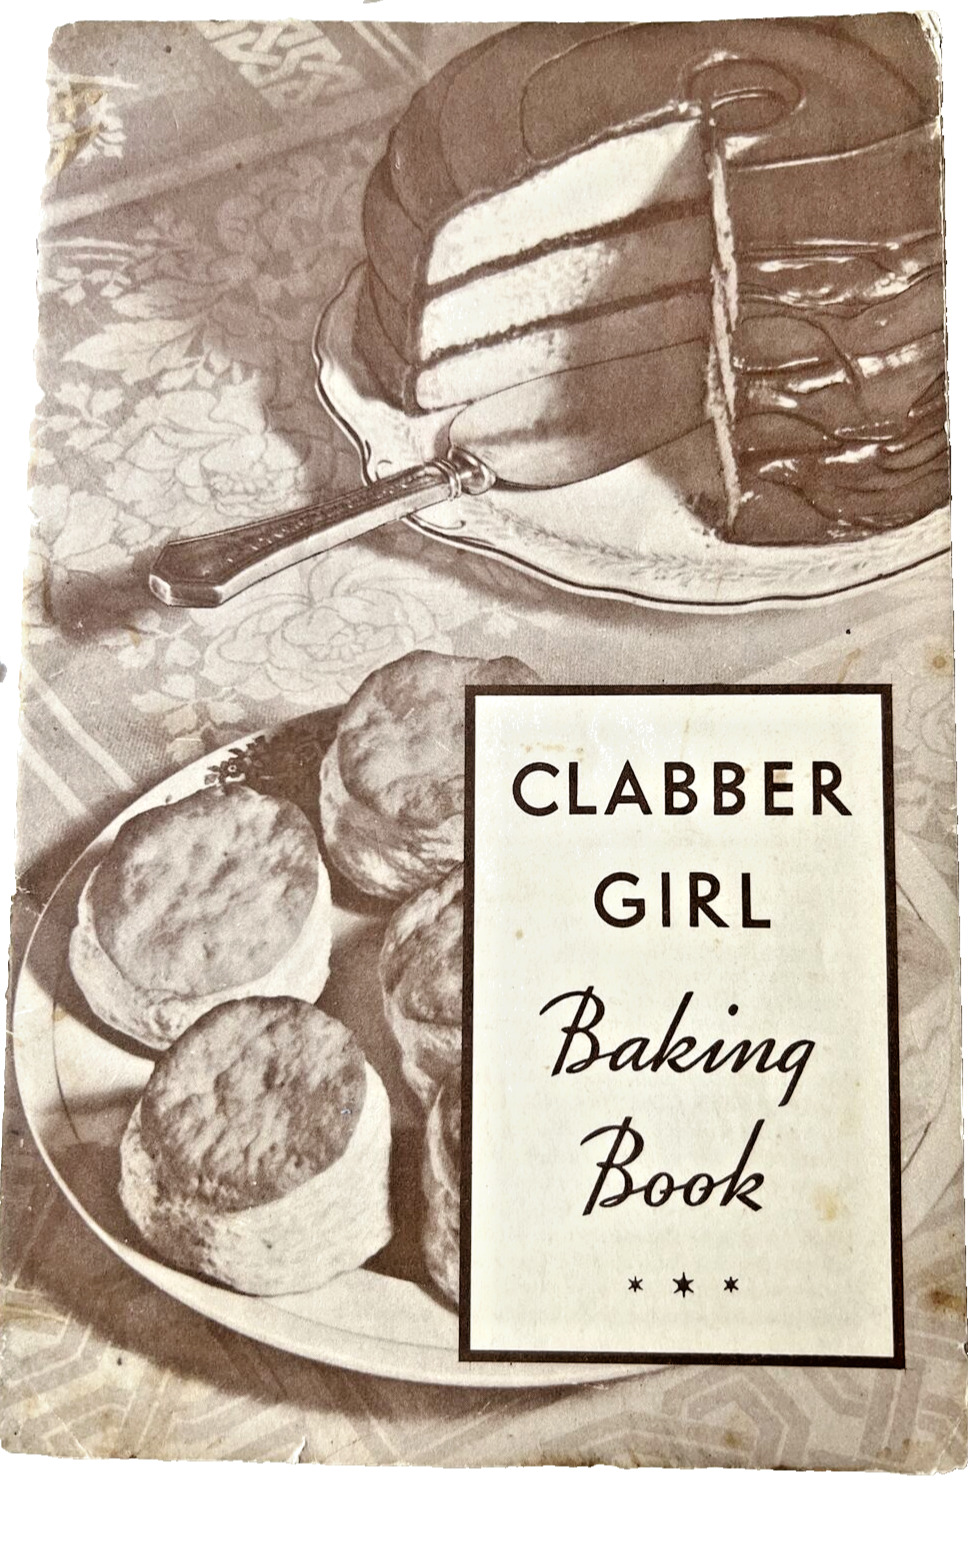 Clabber Girl Baking Book 1934 Clabber Girl Baking Powder Hulman & Co Indiana VTG